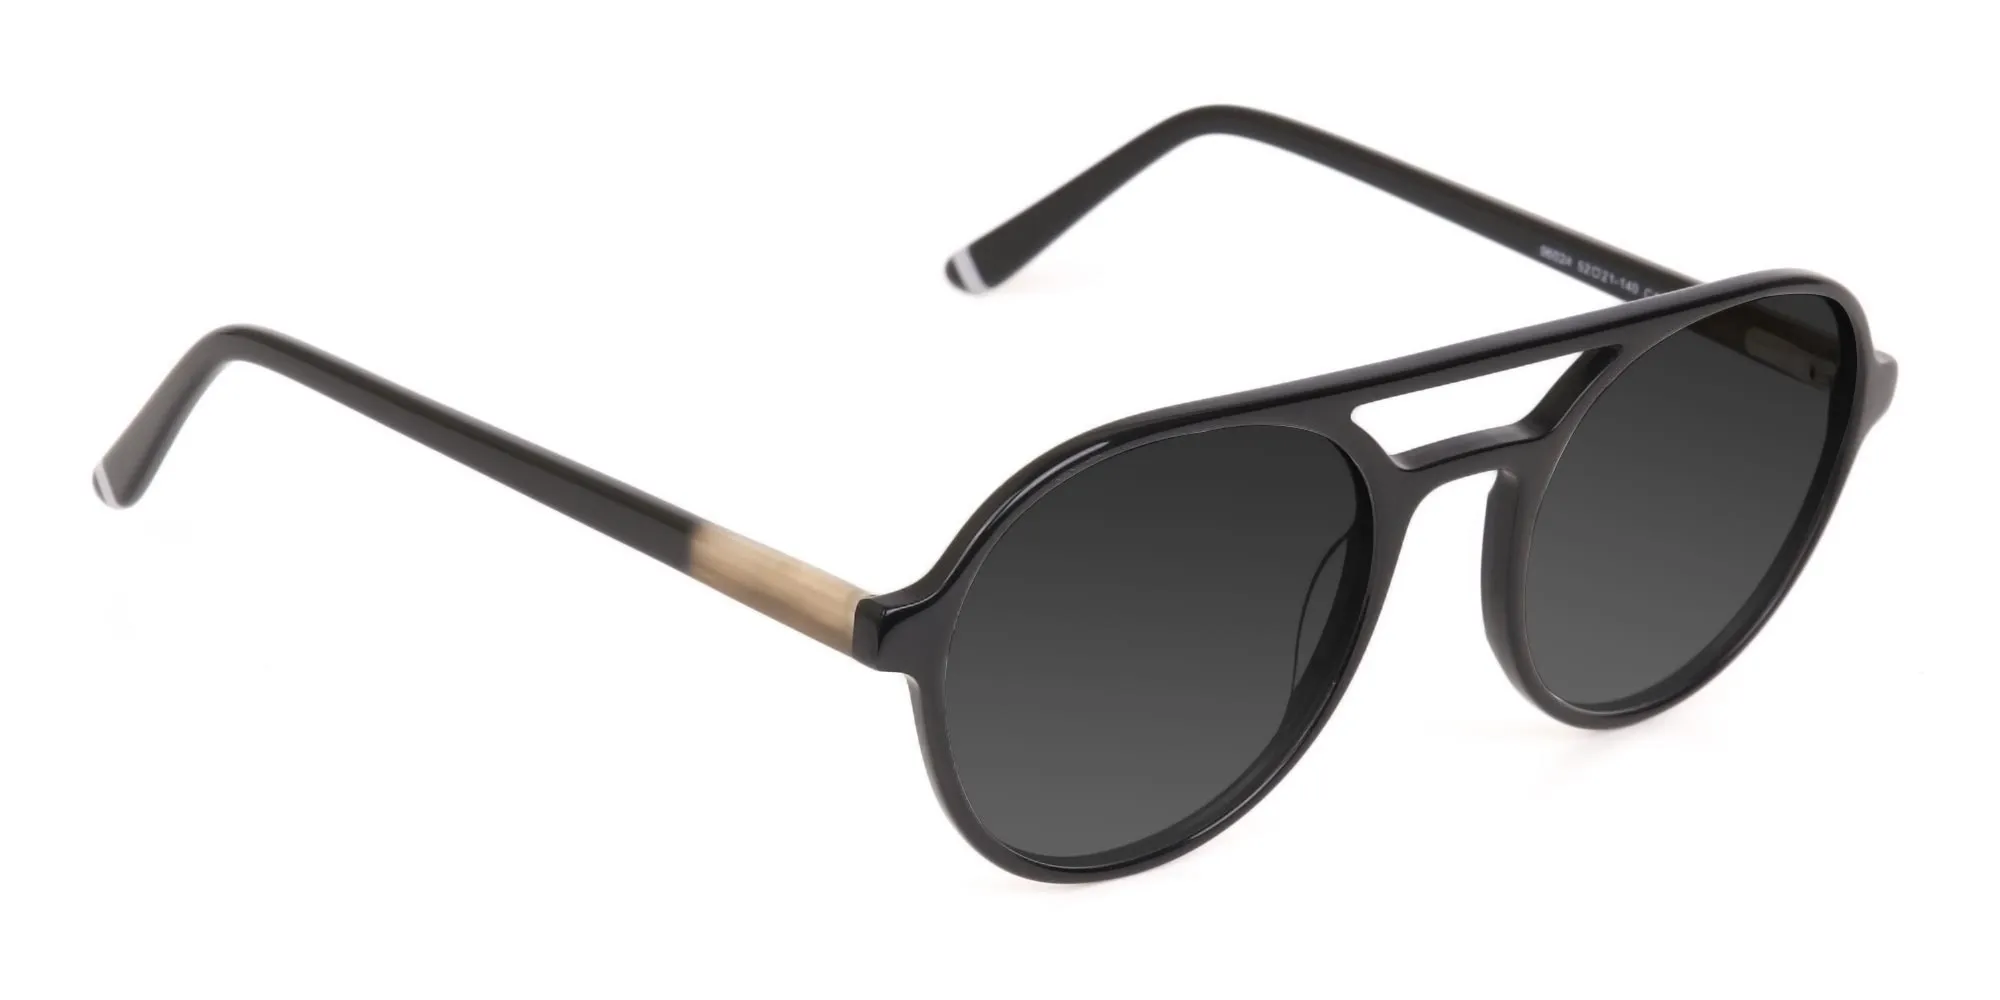 Black Pilot Sunglasses with Dark Grey Lenses - 2 